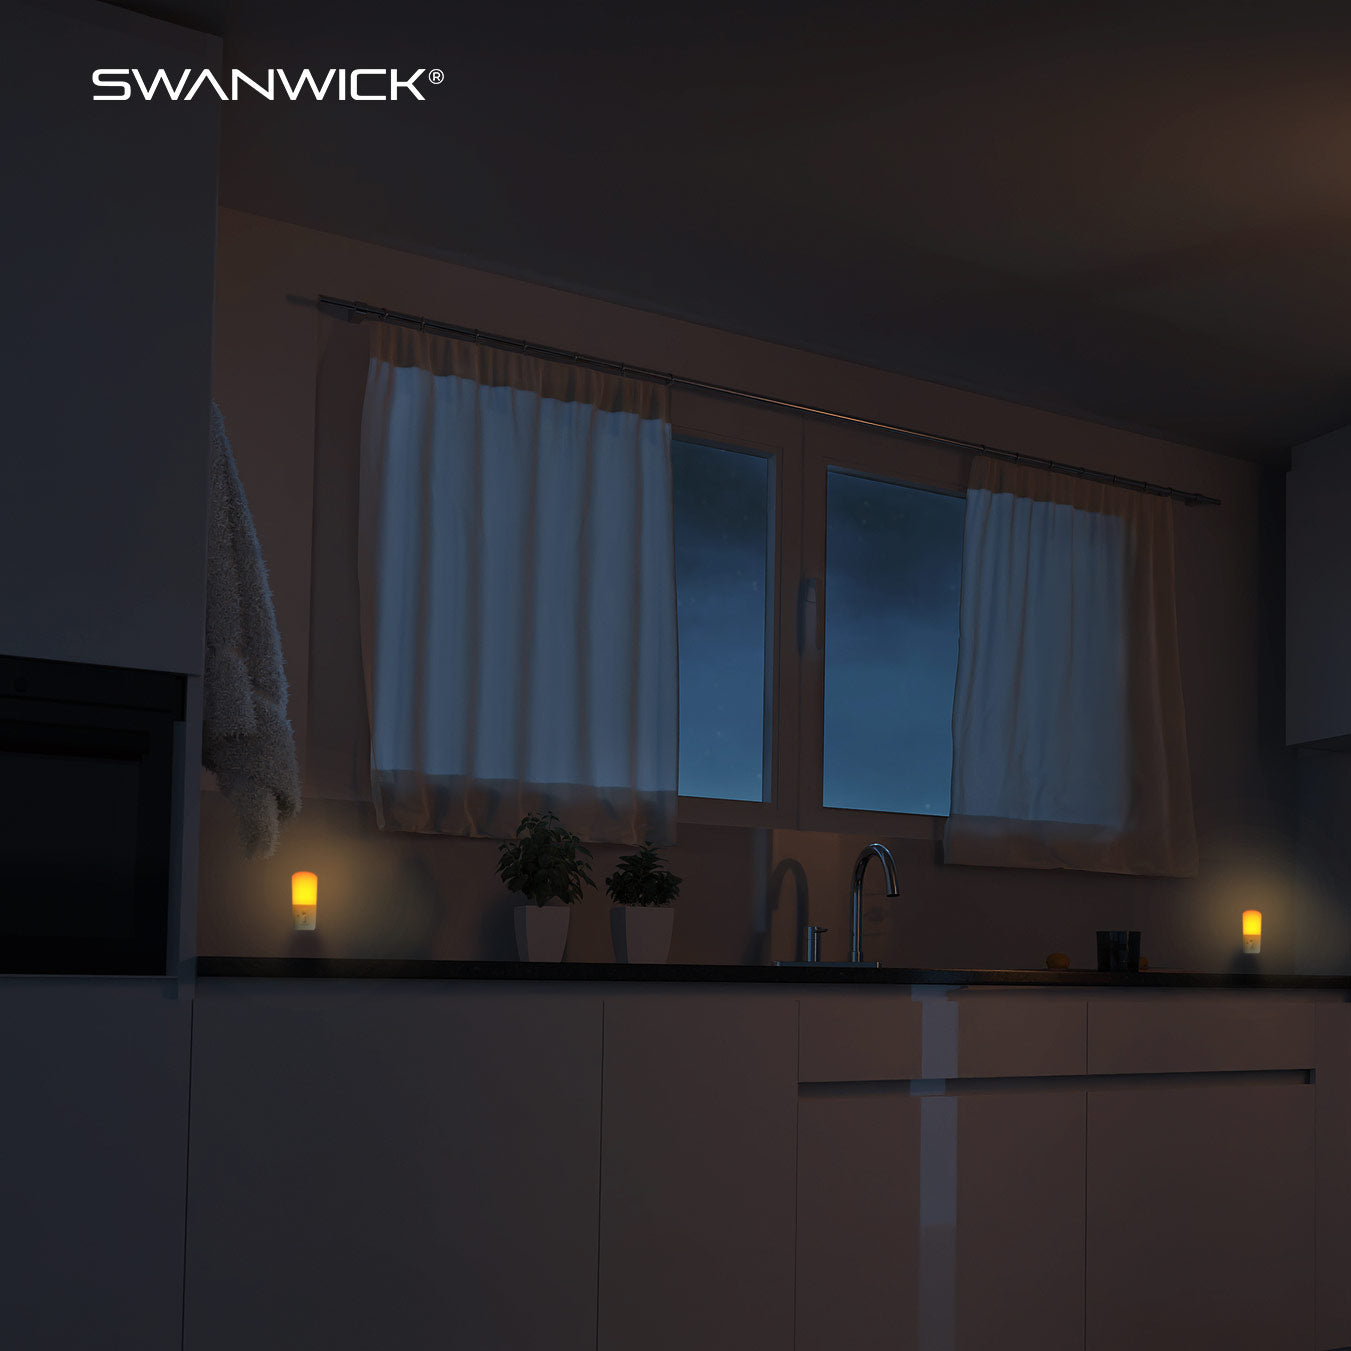 Swanwick Night Light in kitchen